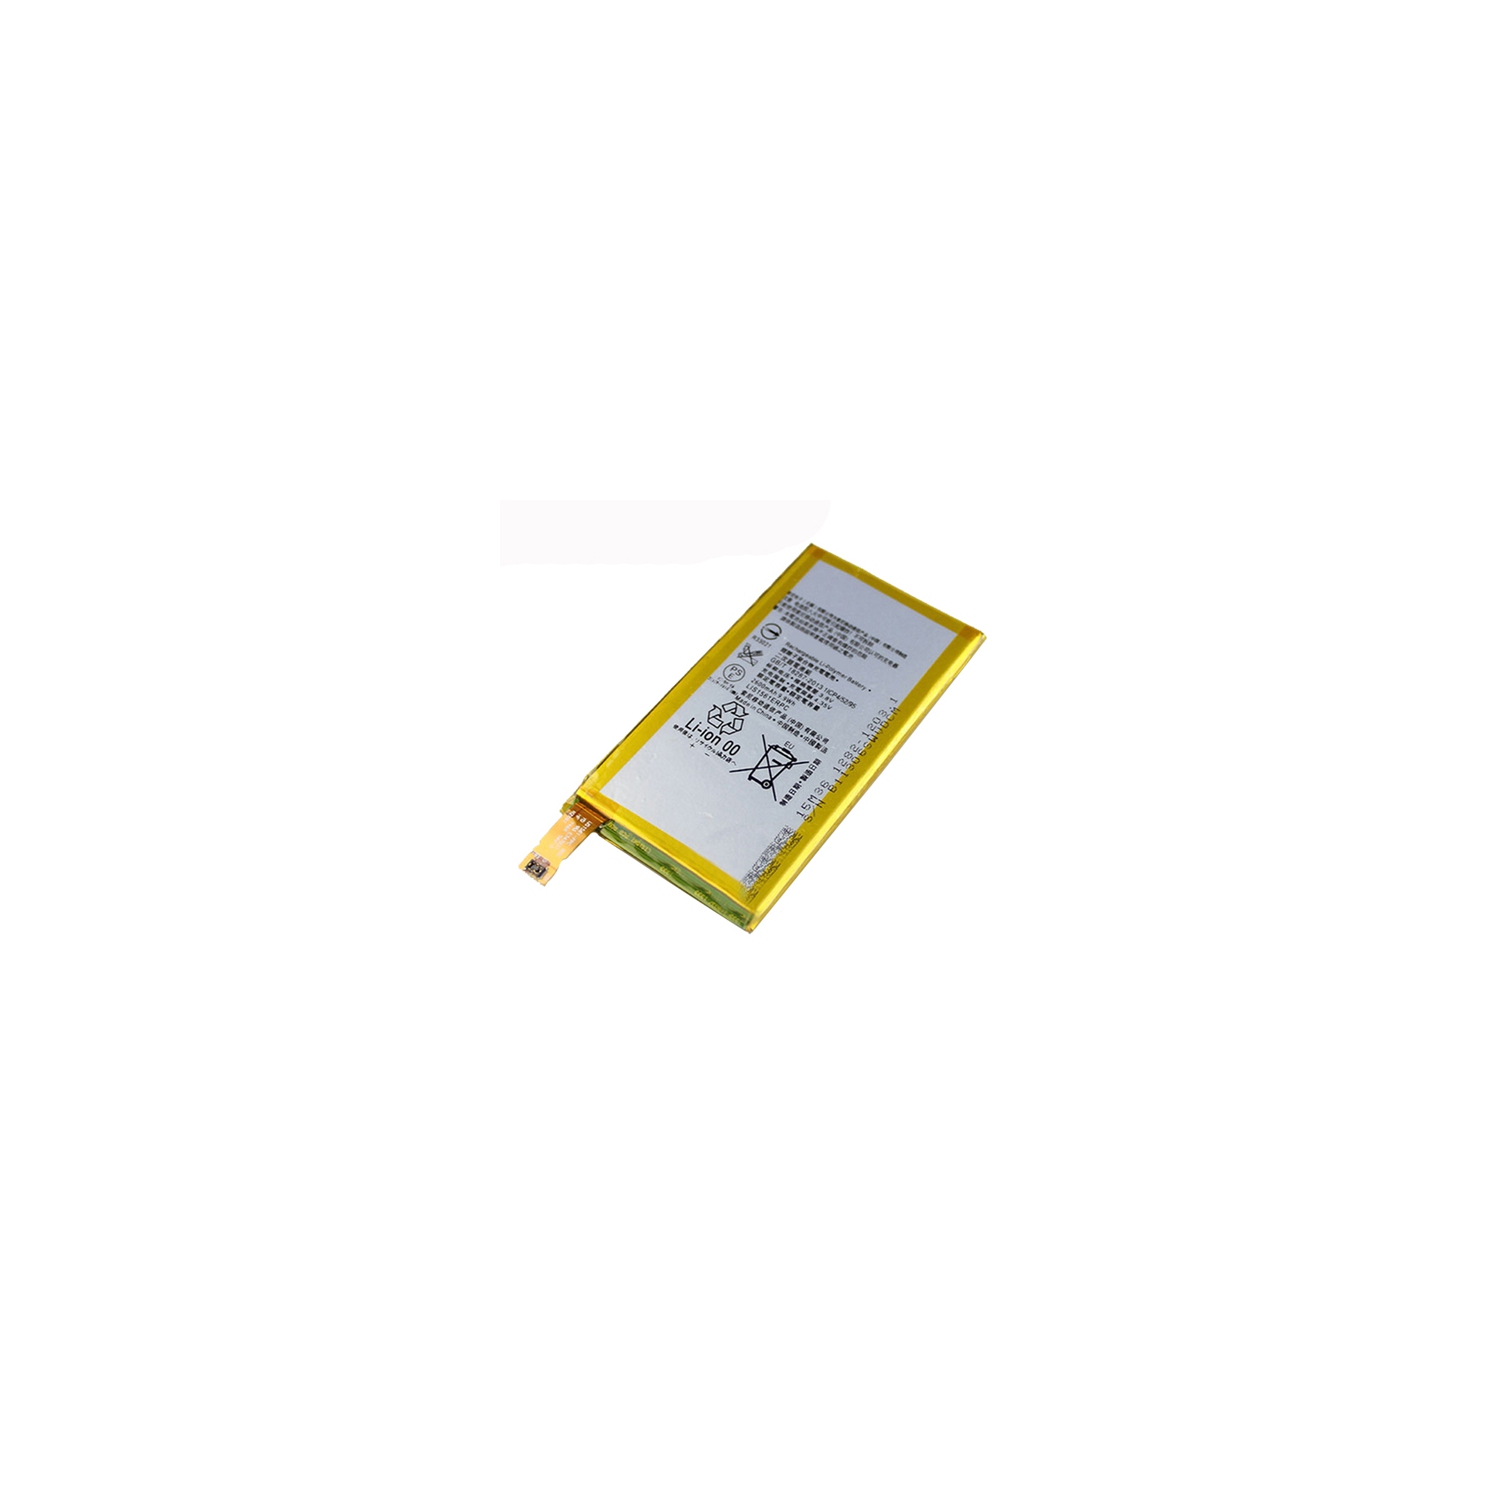 Sony Xperia Z3 Compact Battery – LIS1561ERPC